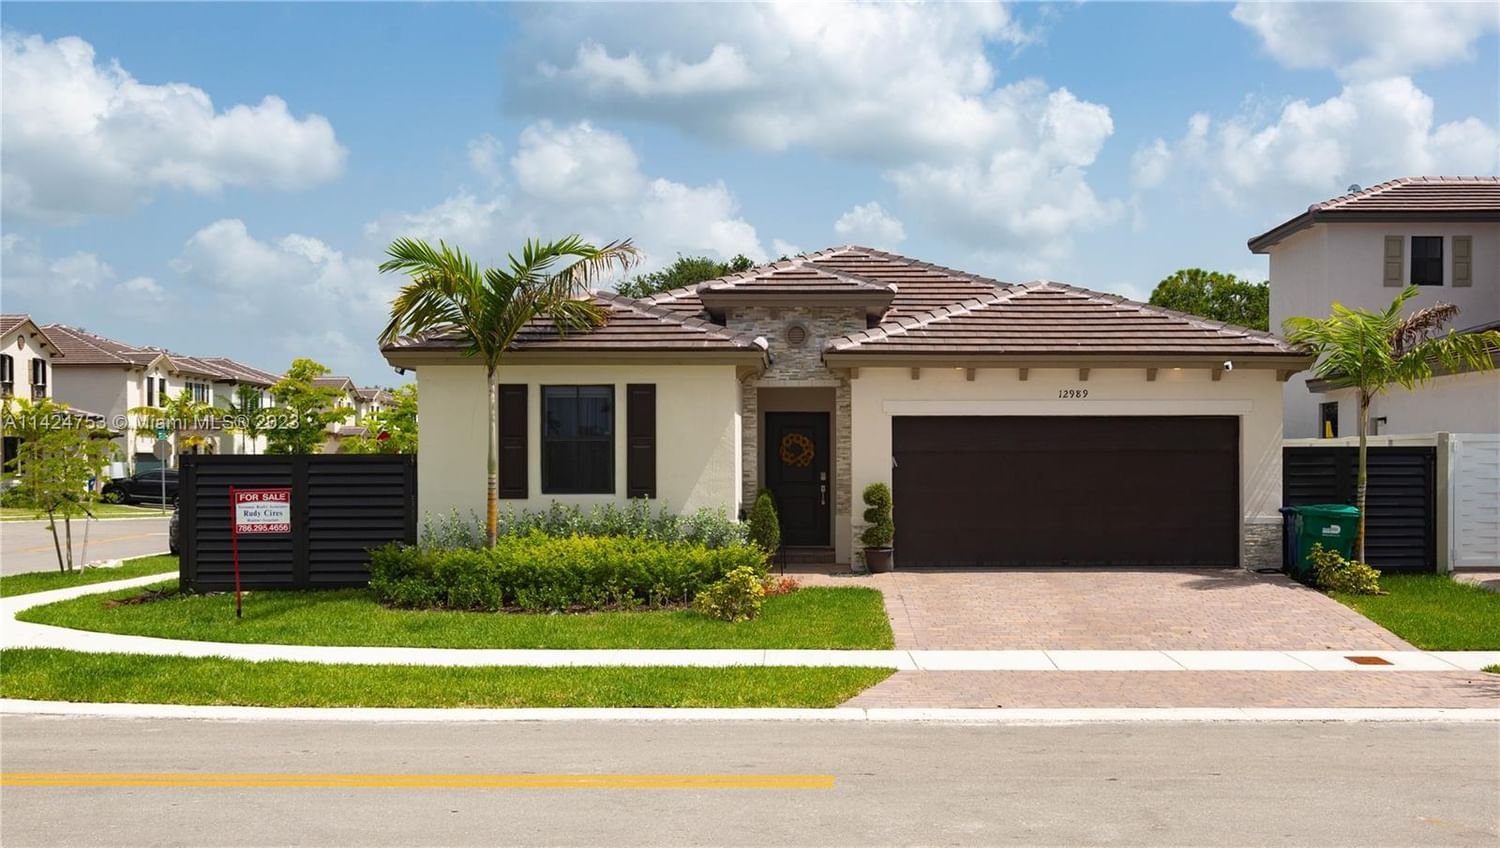 Real estate property located at 12989 229th St, Miami-Dade County, Miami, FL